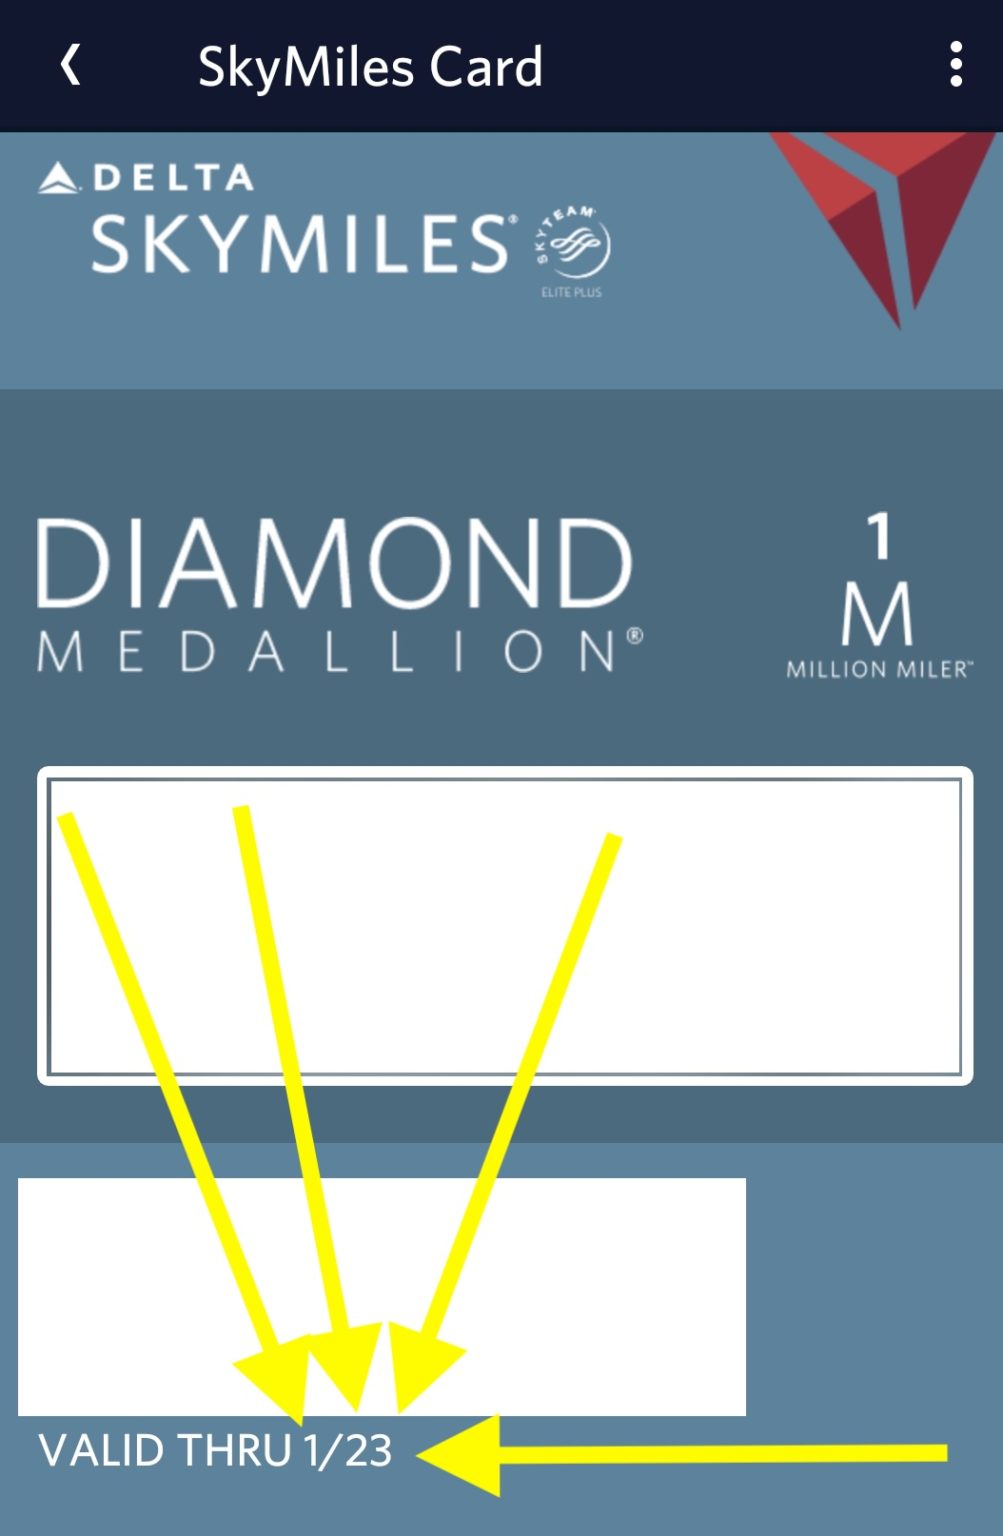 DEVELOPING Delta Diamond Medallion Status EXTENDED Through January